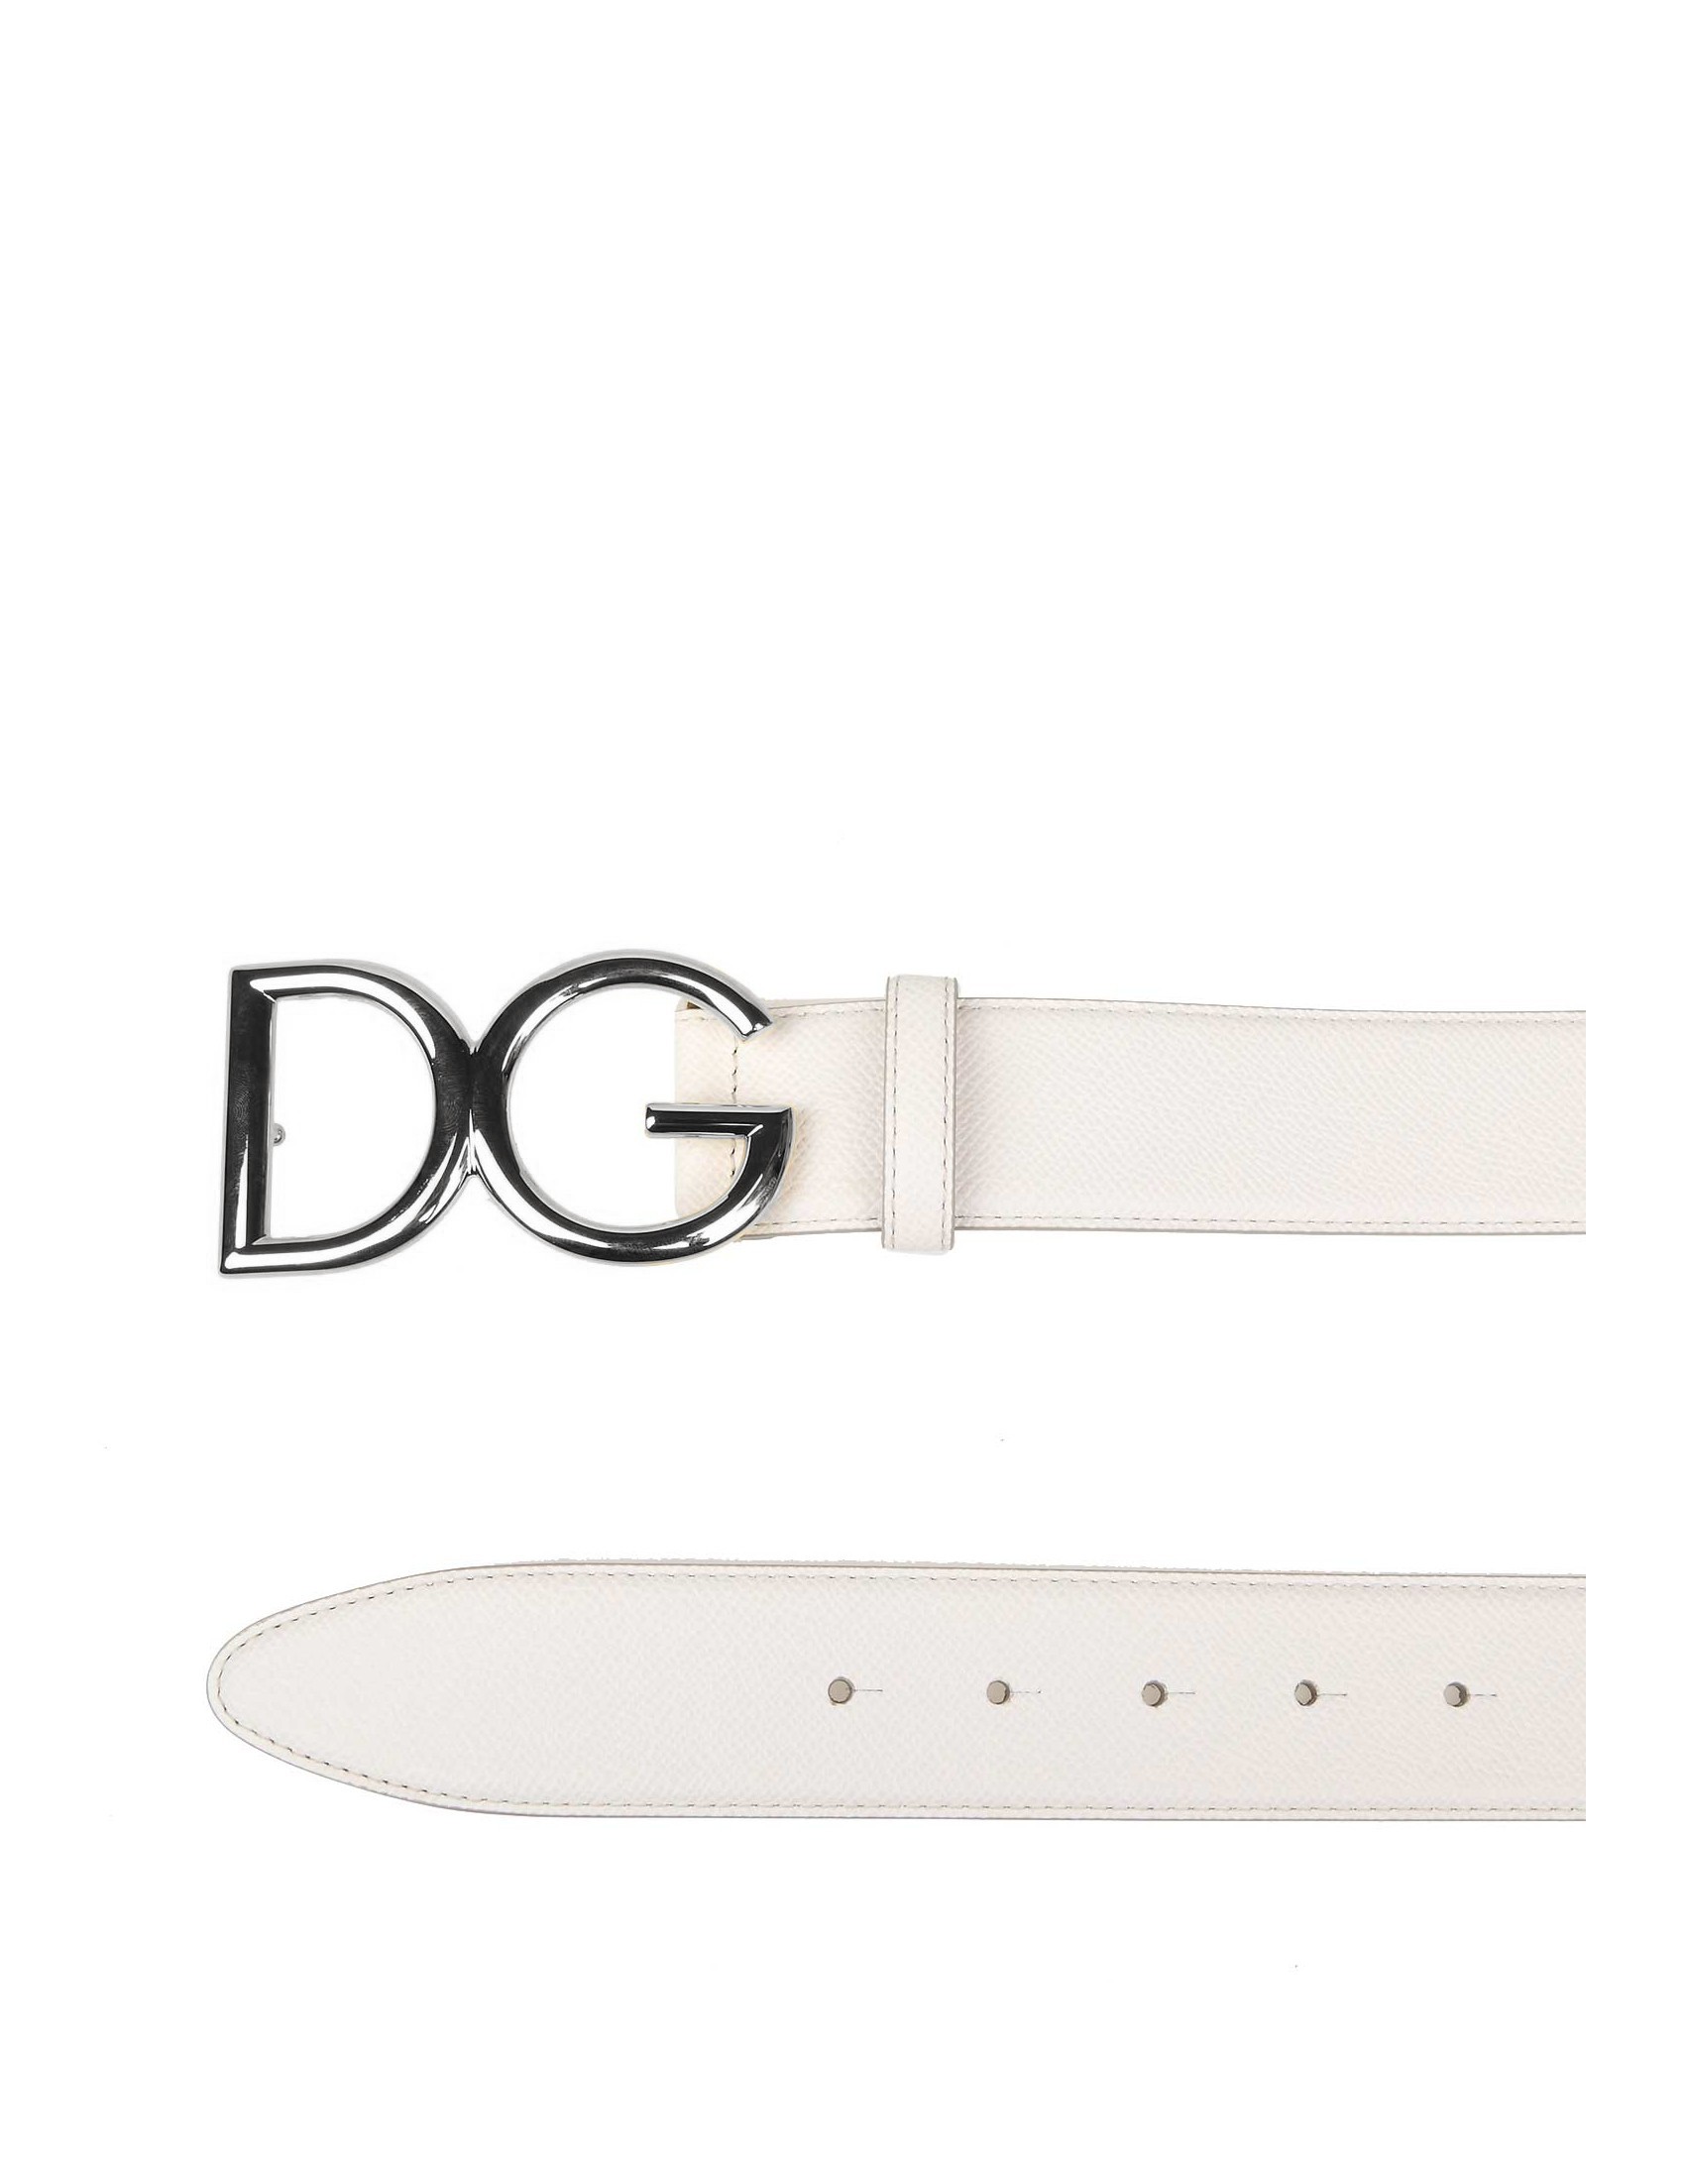 white dolce and gabbana belt